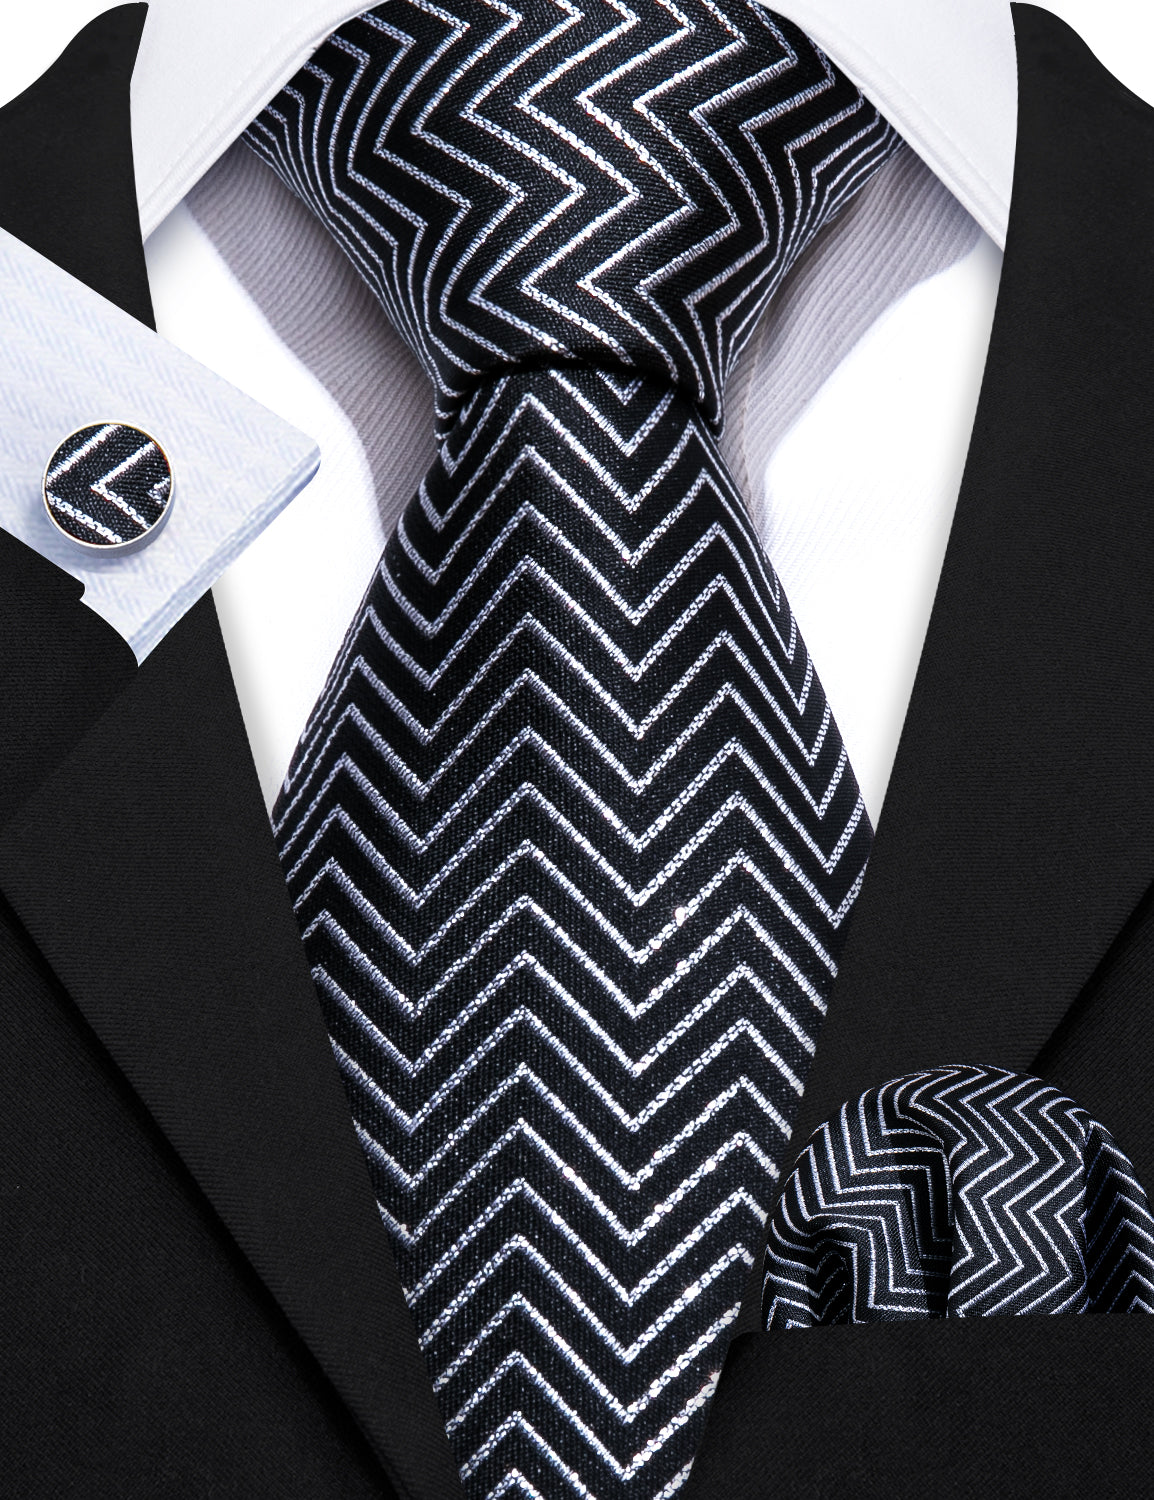 Barry.wang Black Tie White Striped Tie Handkerchief Cufflinks Set